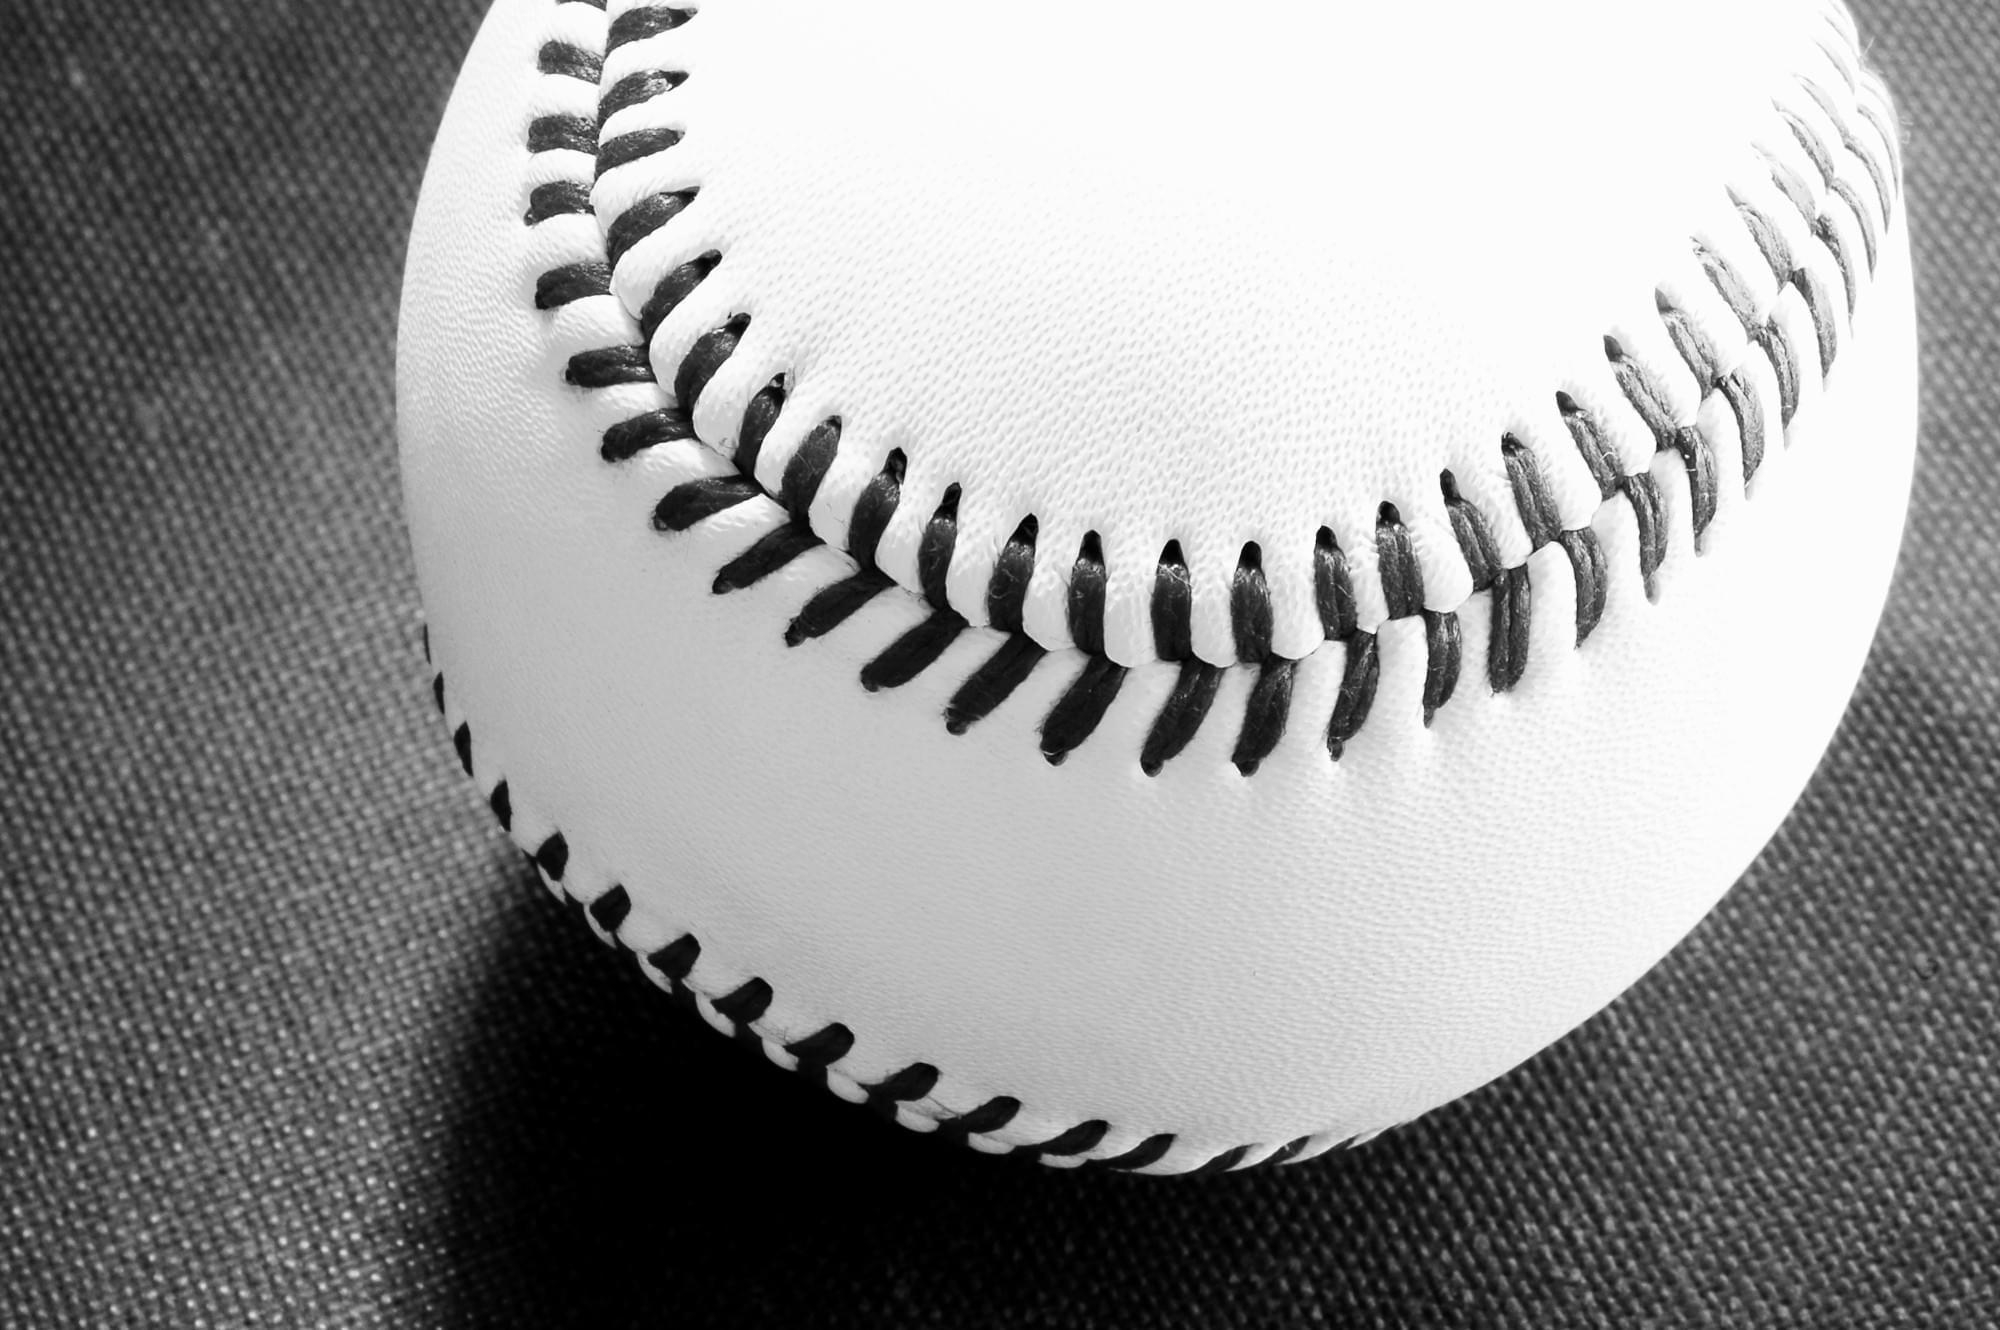 A black and white photo of a baseball